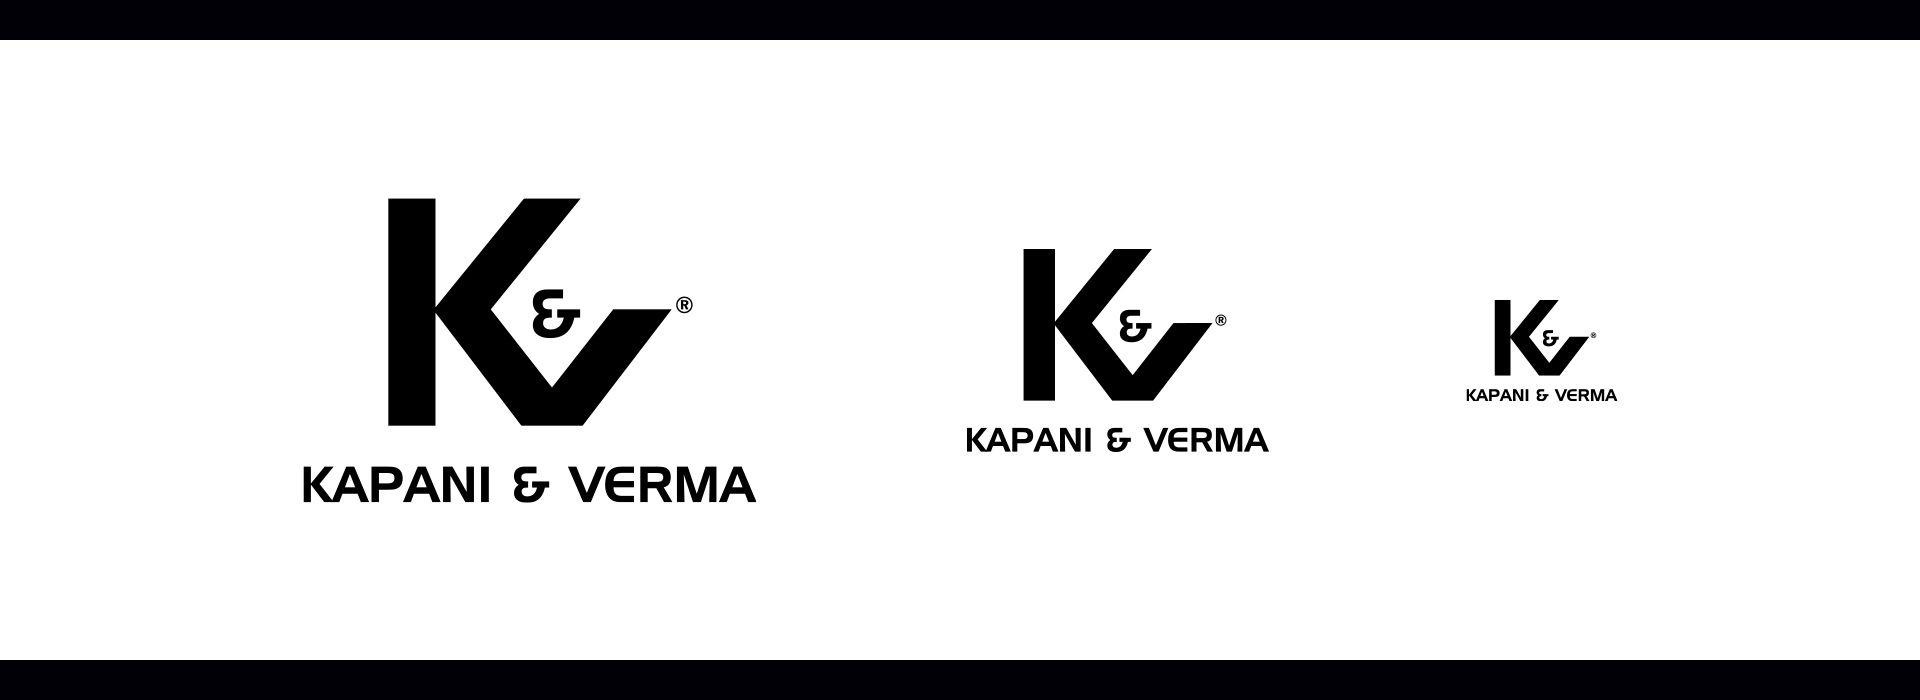 High End Apparel Logo - Logo Design for Apparel Company Kapani & Verma. Design Studio. KD